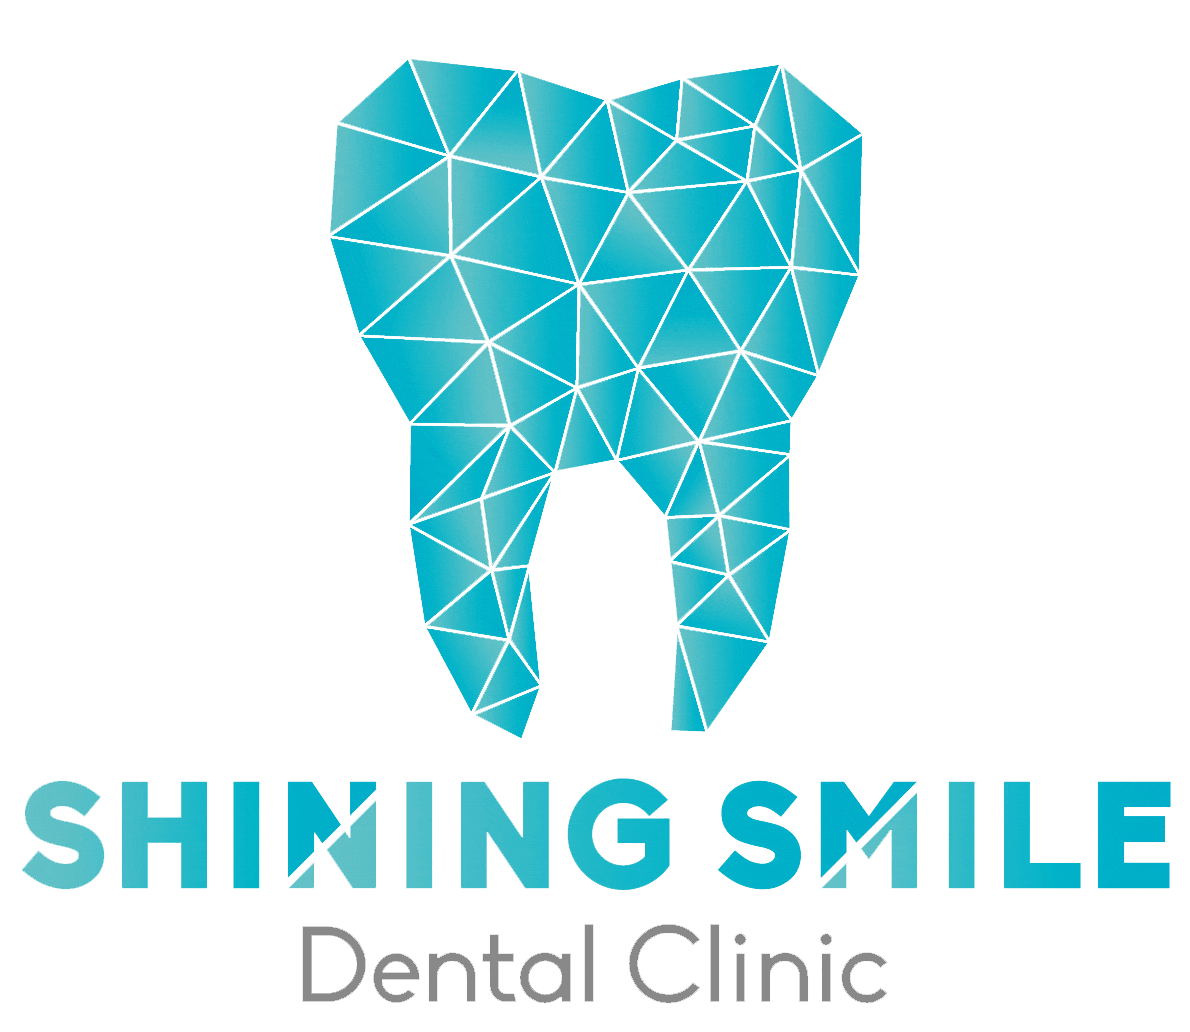 Shining Smile company logo